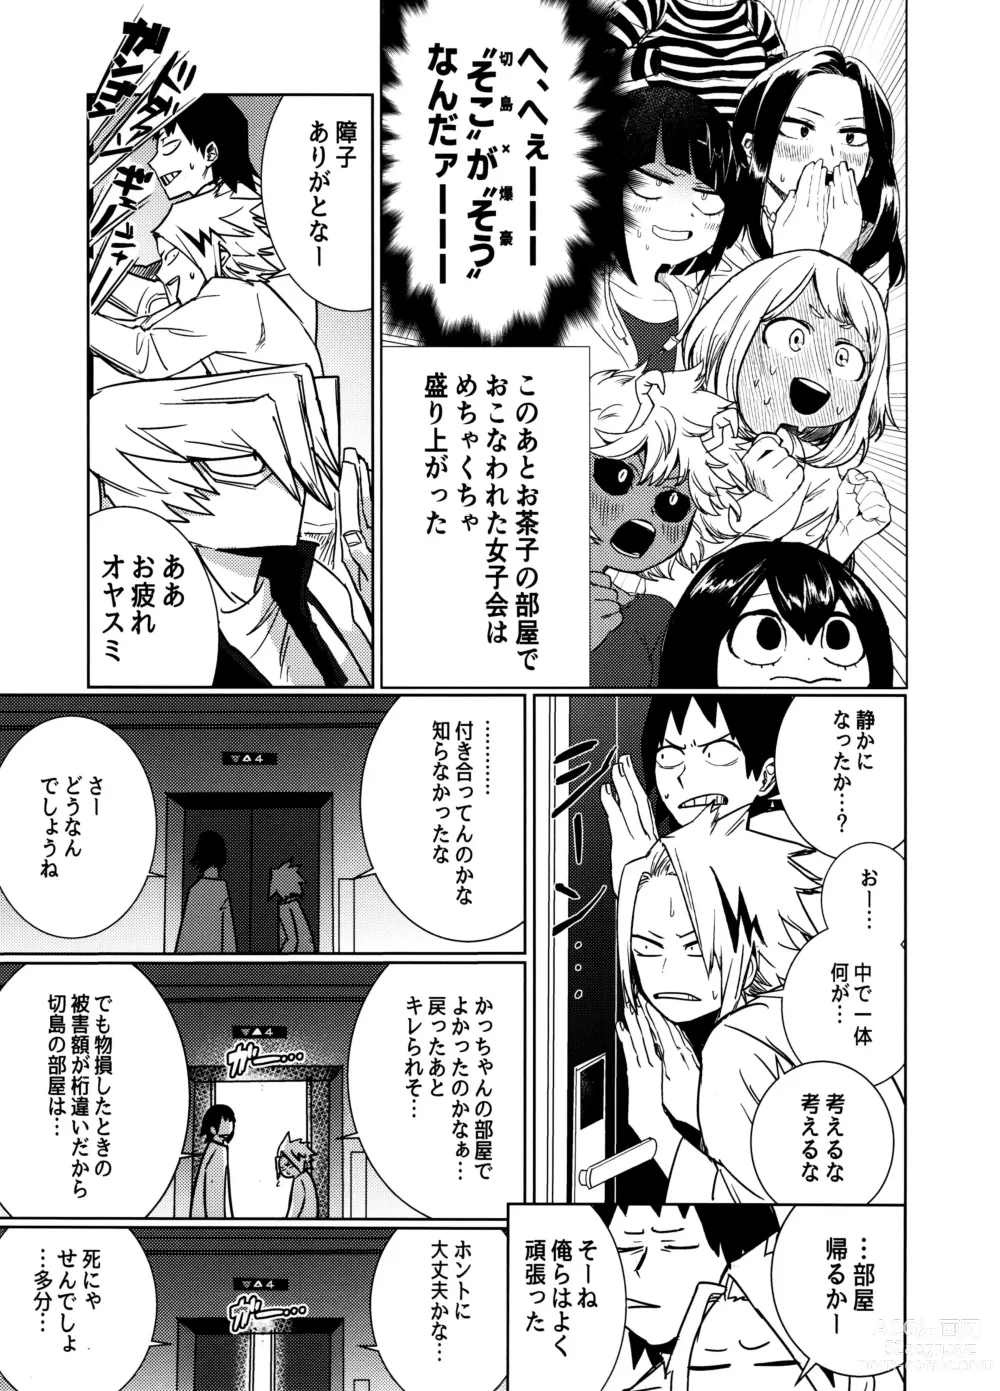 Page 13 of doujinshi Nekojiko Trigger